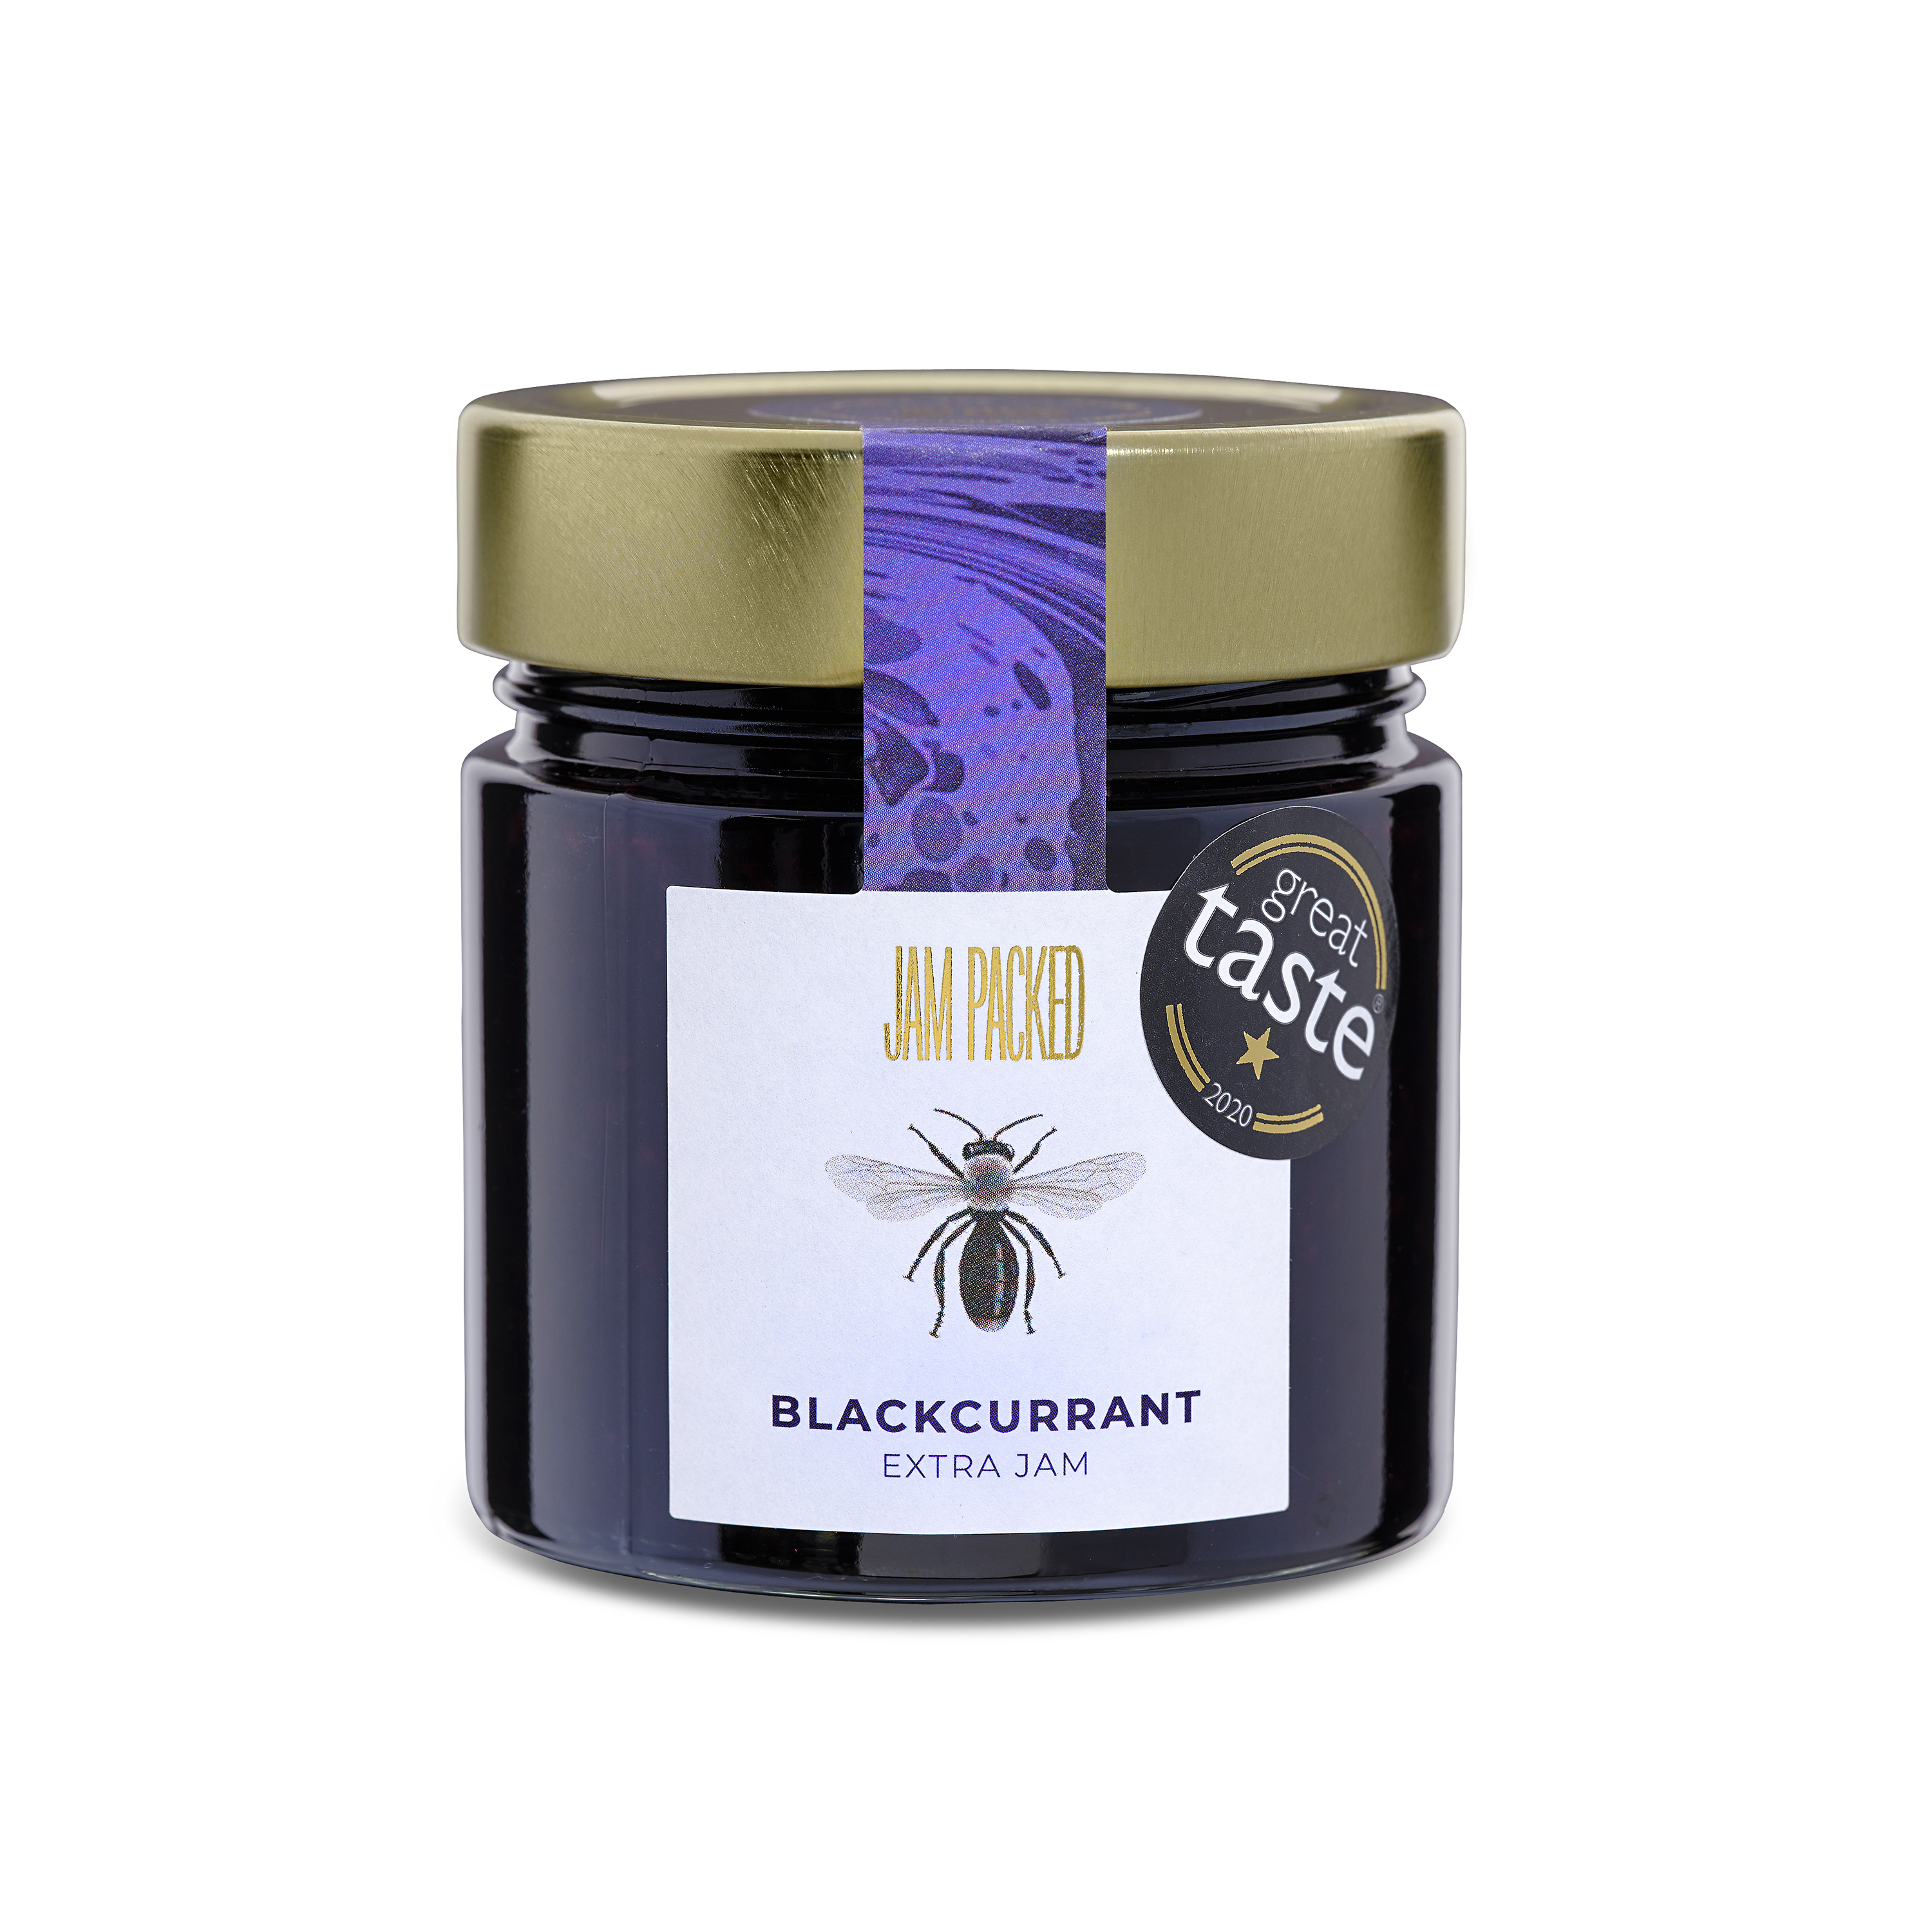 Award-winning Blackcurrant Extra Jam